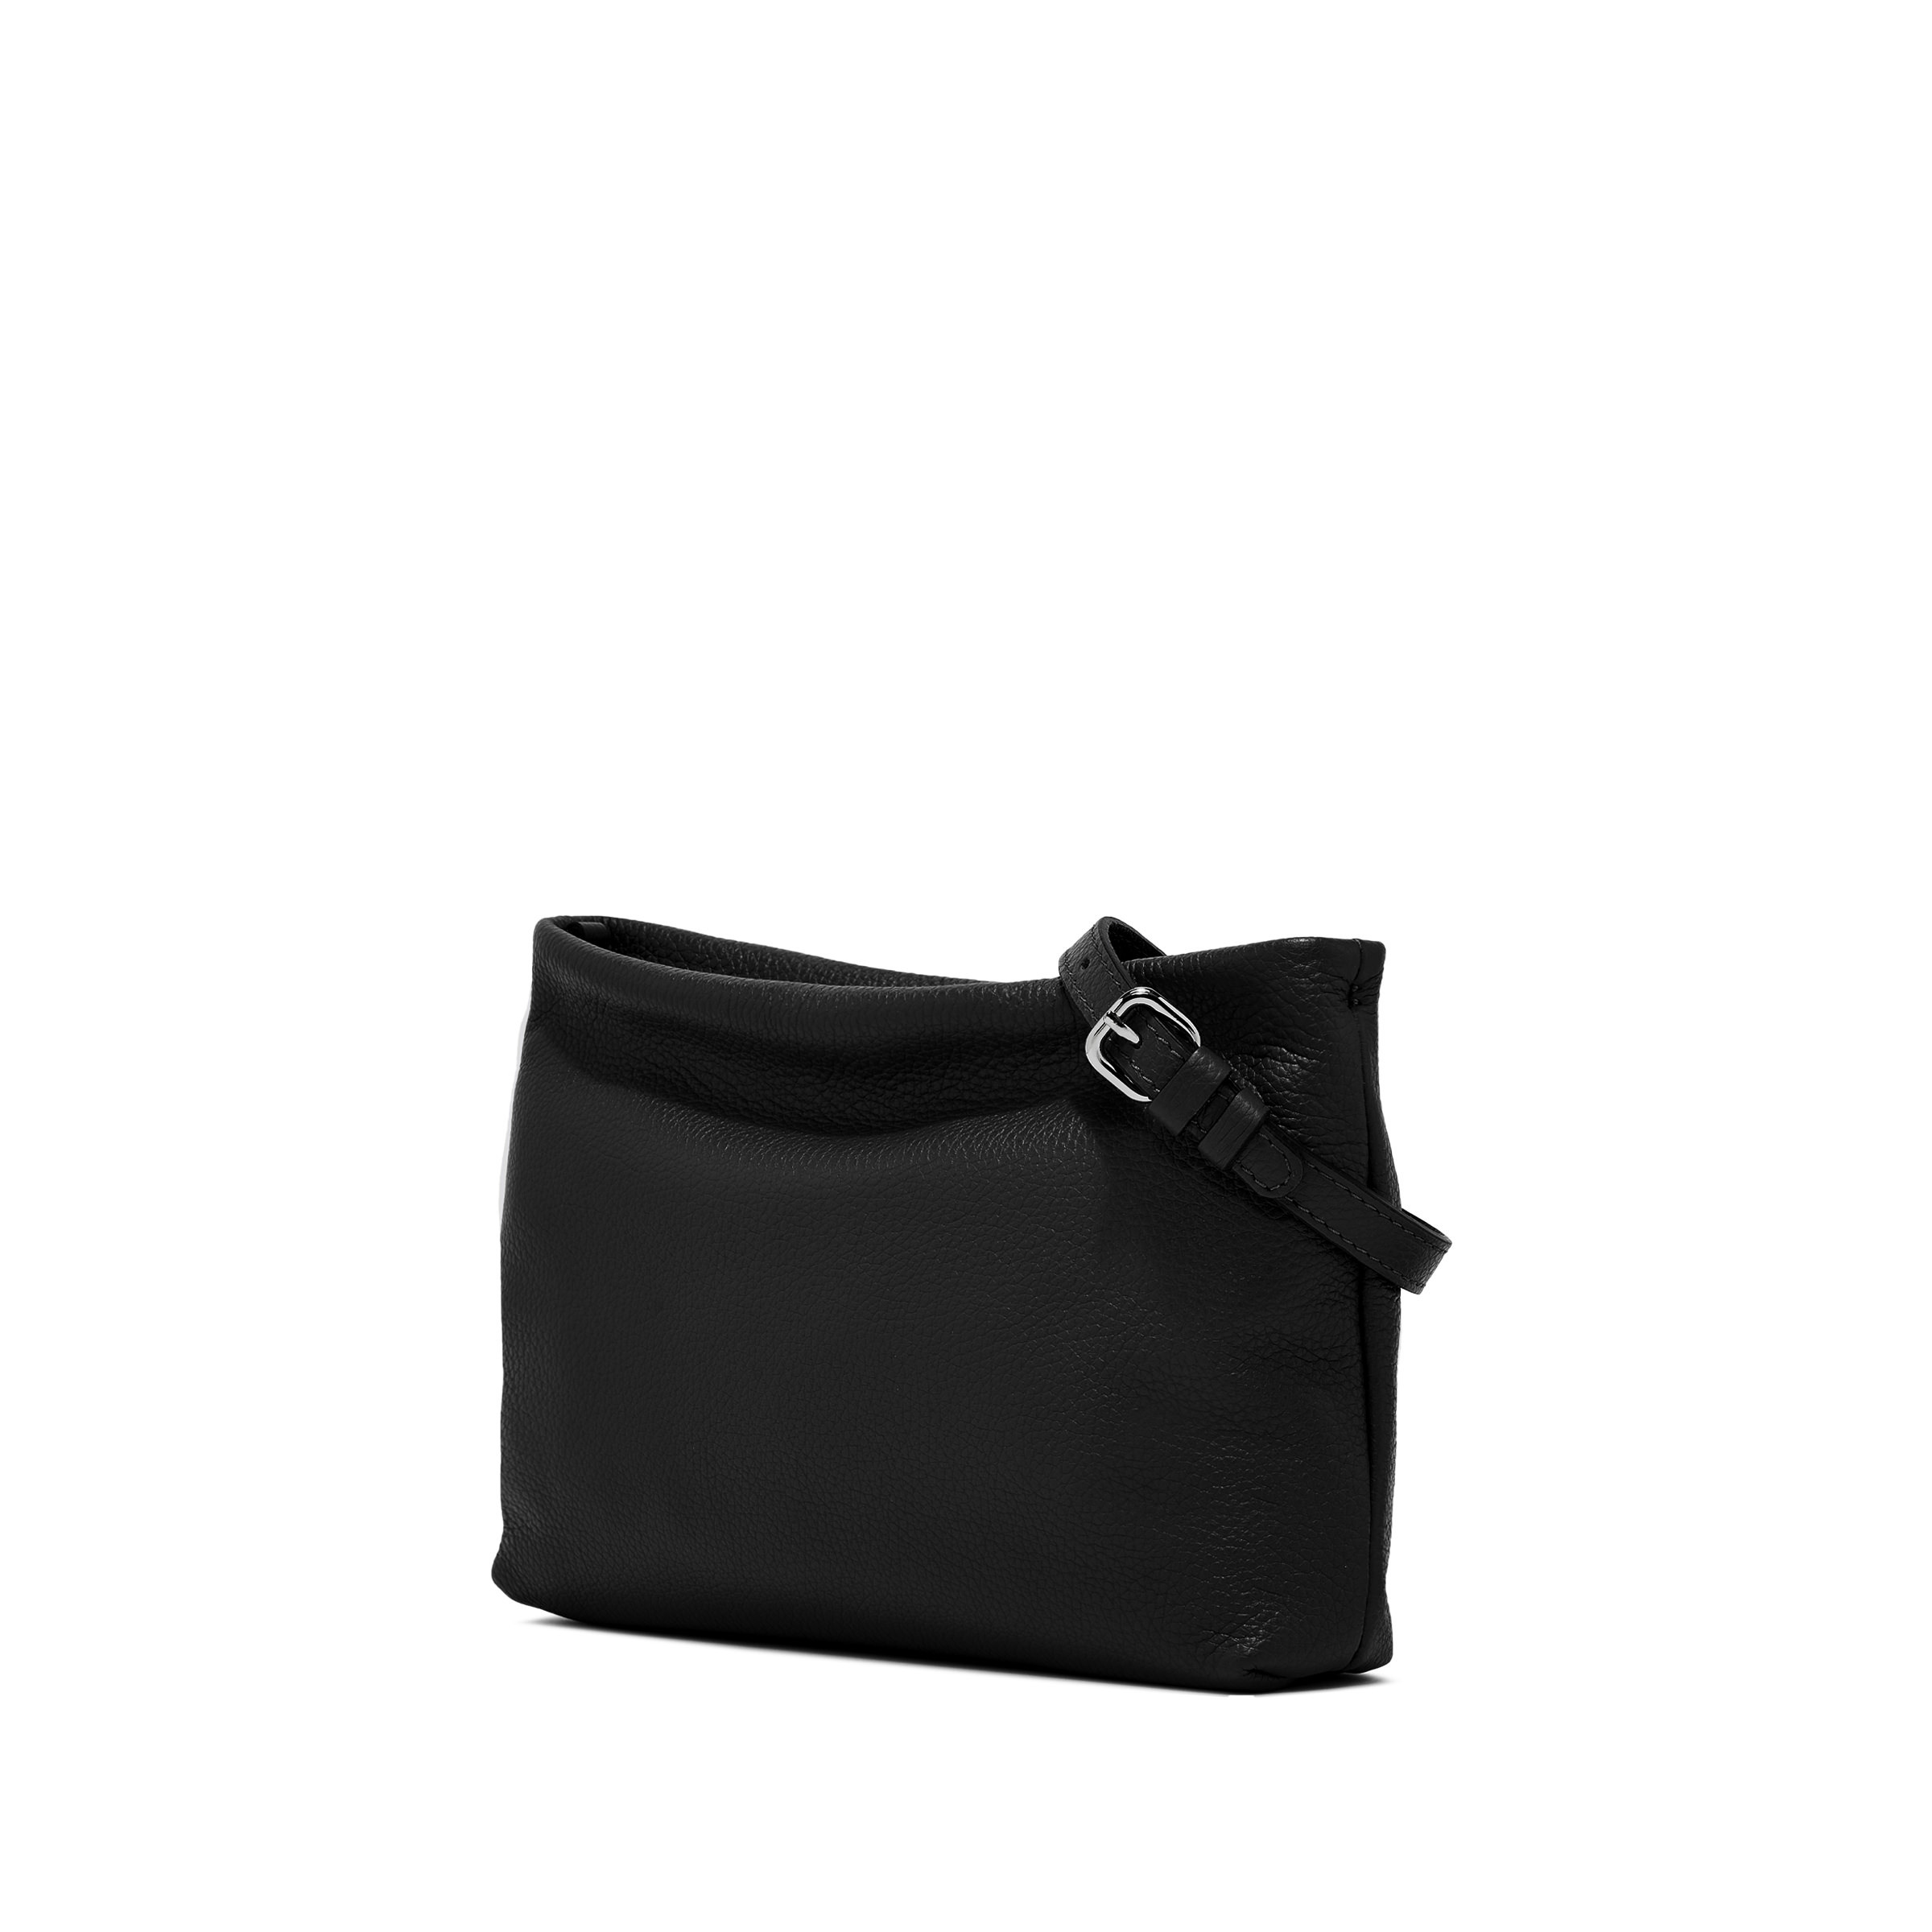 Gianni Chiarini - Brenda leather bag, Black, large image number 3